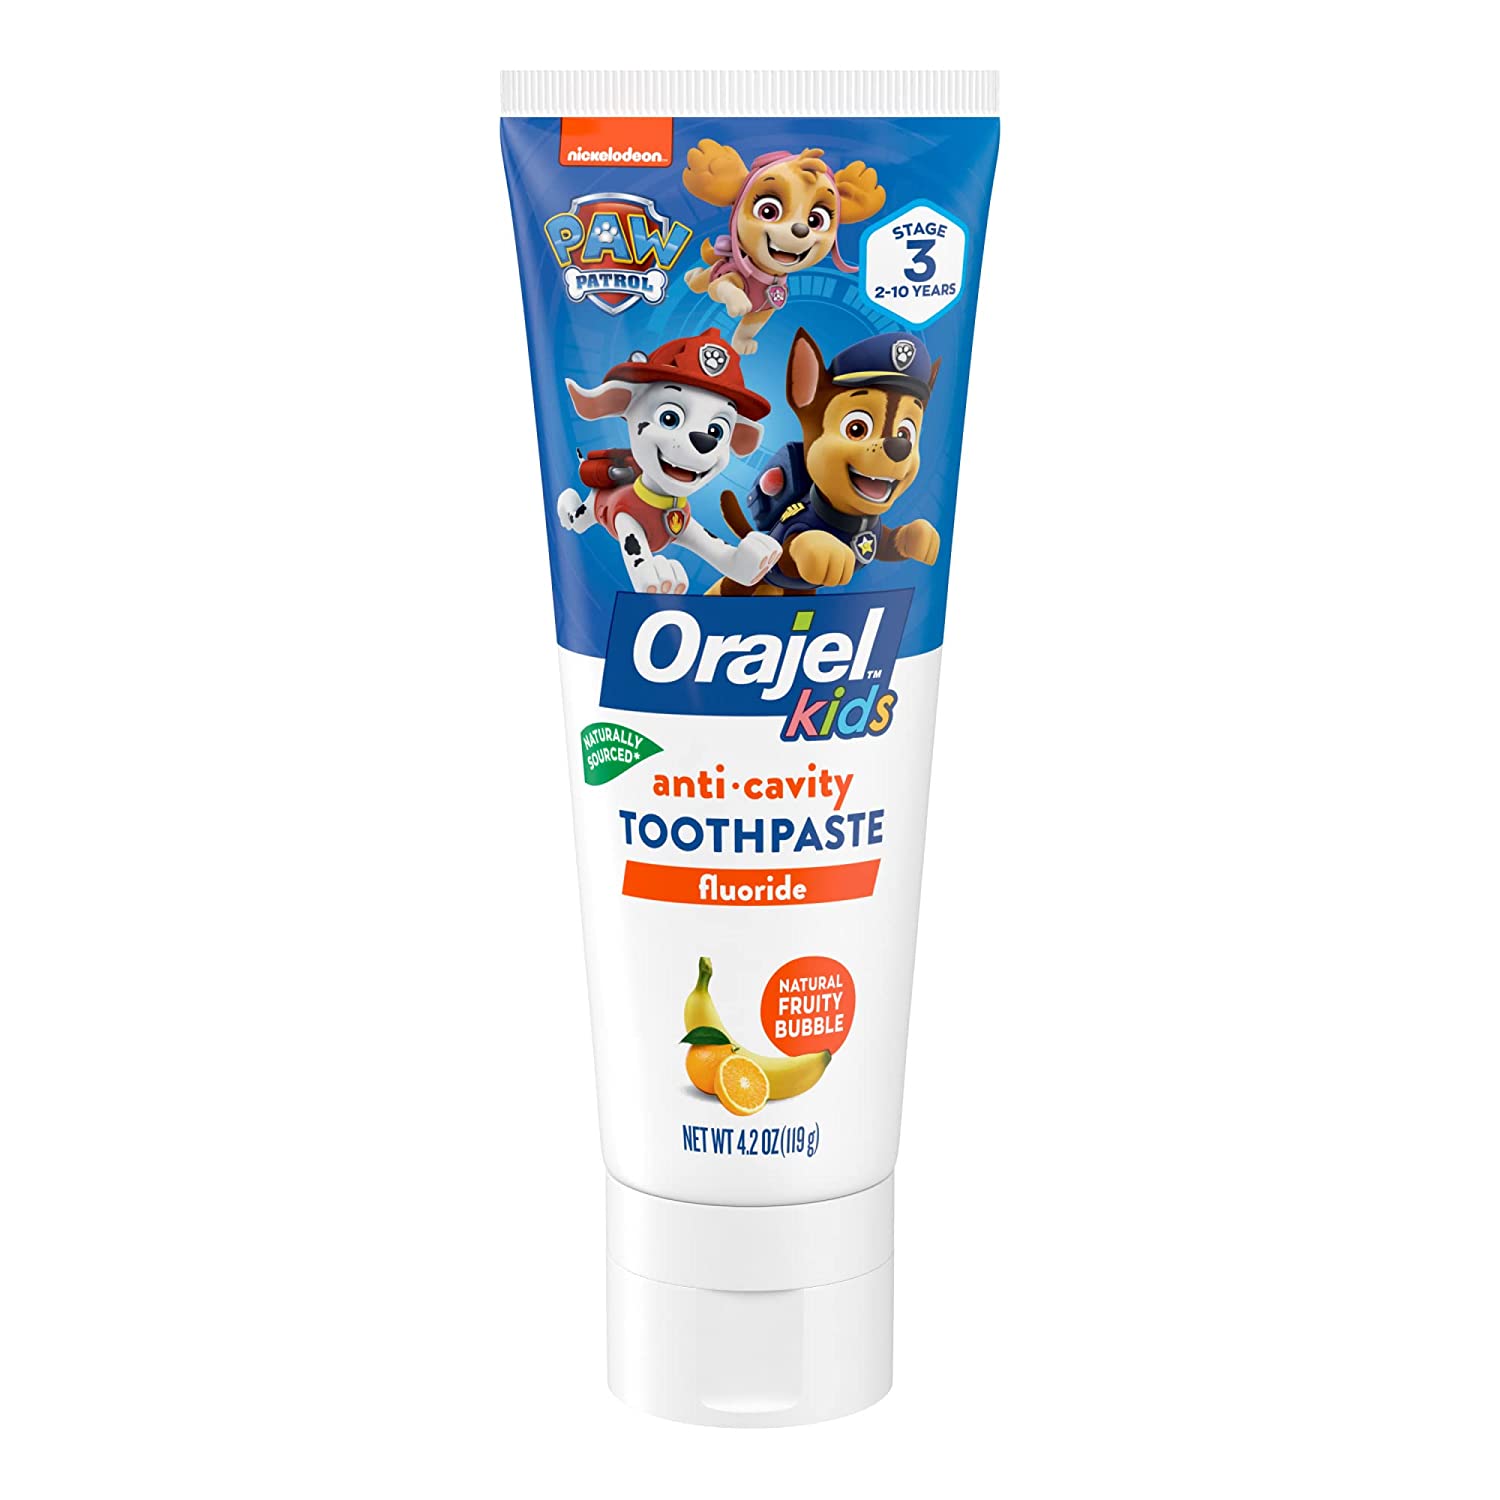 4.2-Oz Orajel Kids Paw Patrol Anti-Cavity Fluoride Toothpaste (Fruity Bubble) $1.65 + Free Shipping w/ Prime or on $25+